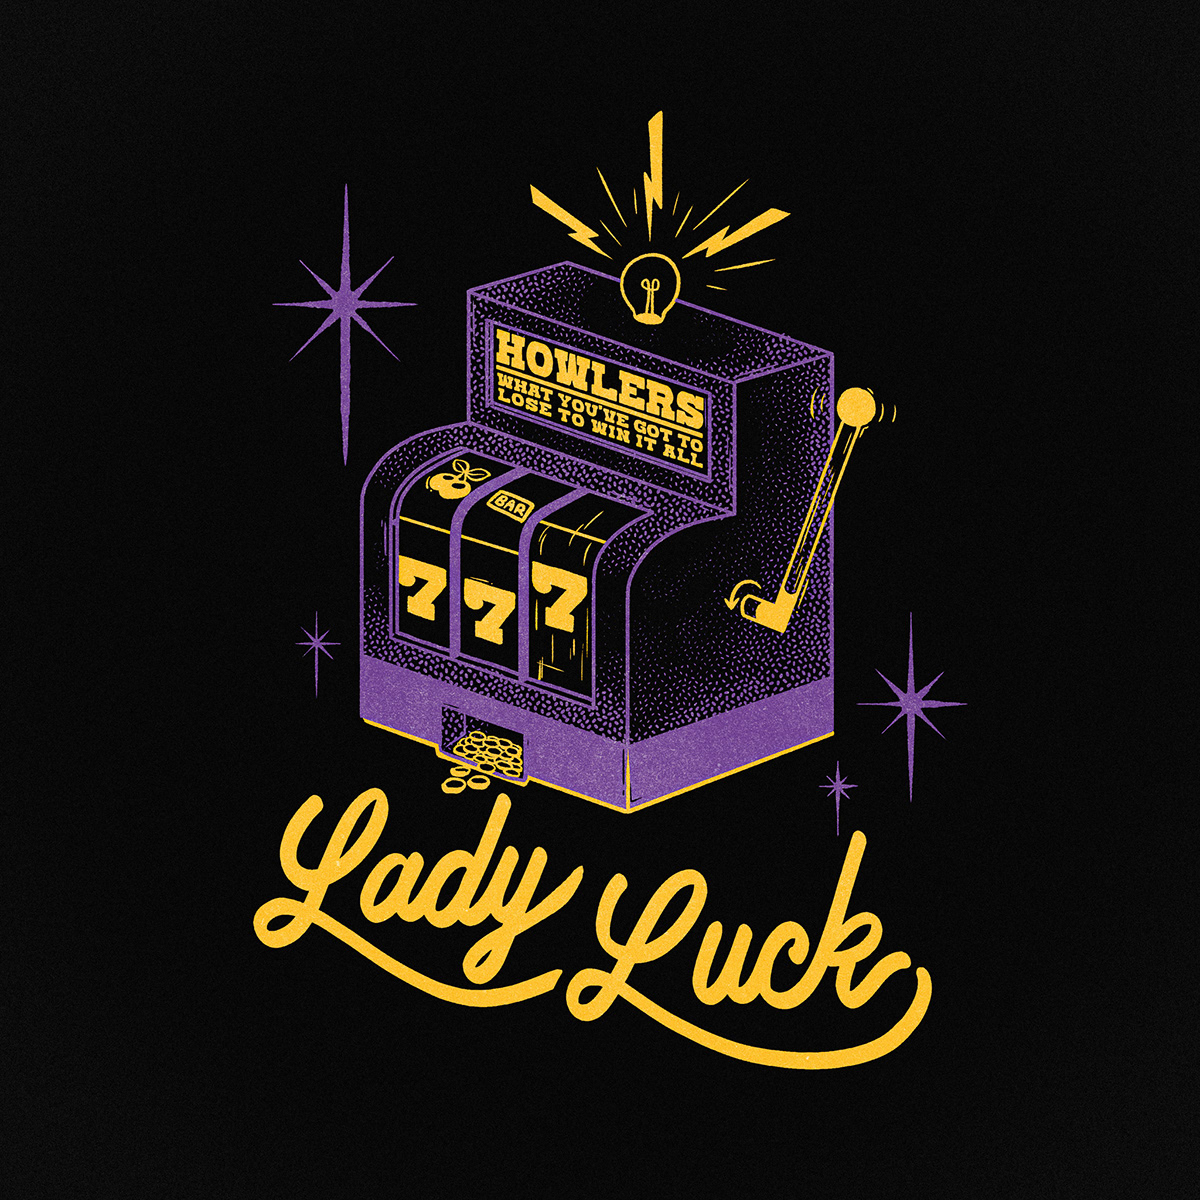 slot machine gambling luck Lady stipple cowboy Merch 7's howlers